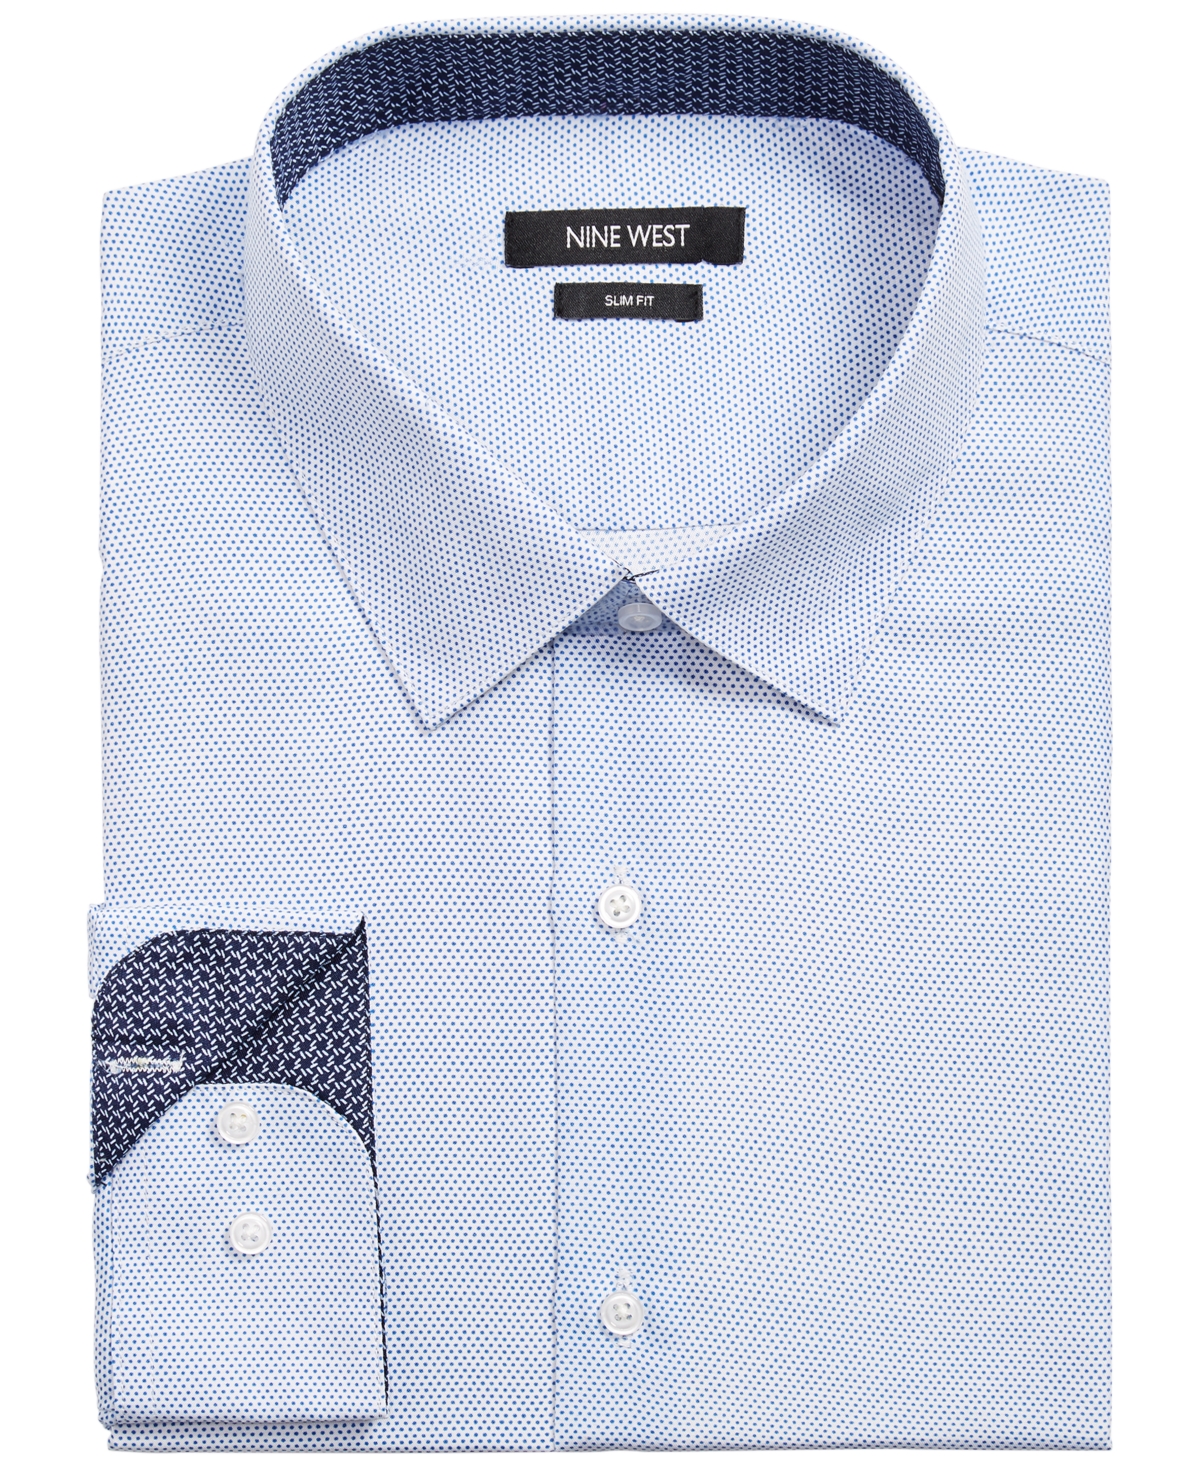 Men's Slim-Fit Performance Stretch Micro-Dot Dress Shirt - White/Blue/Navy